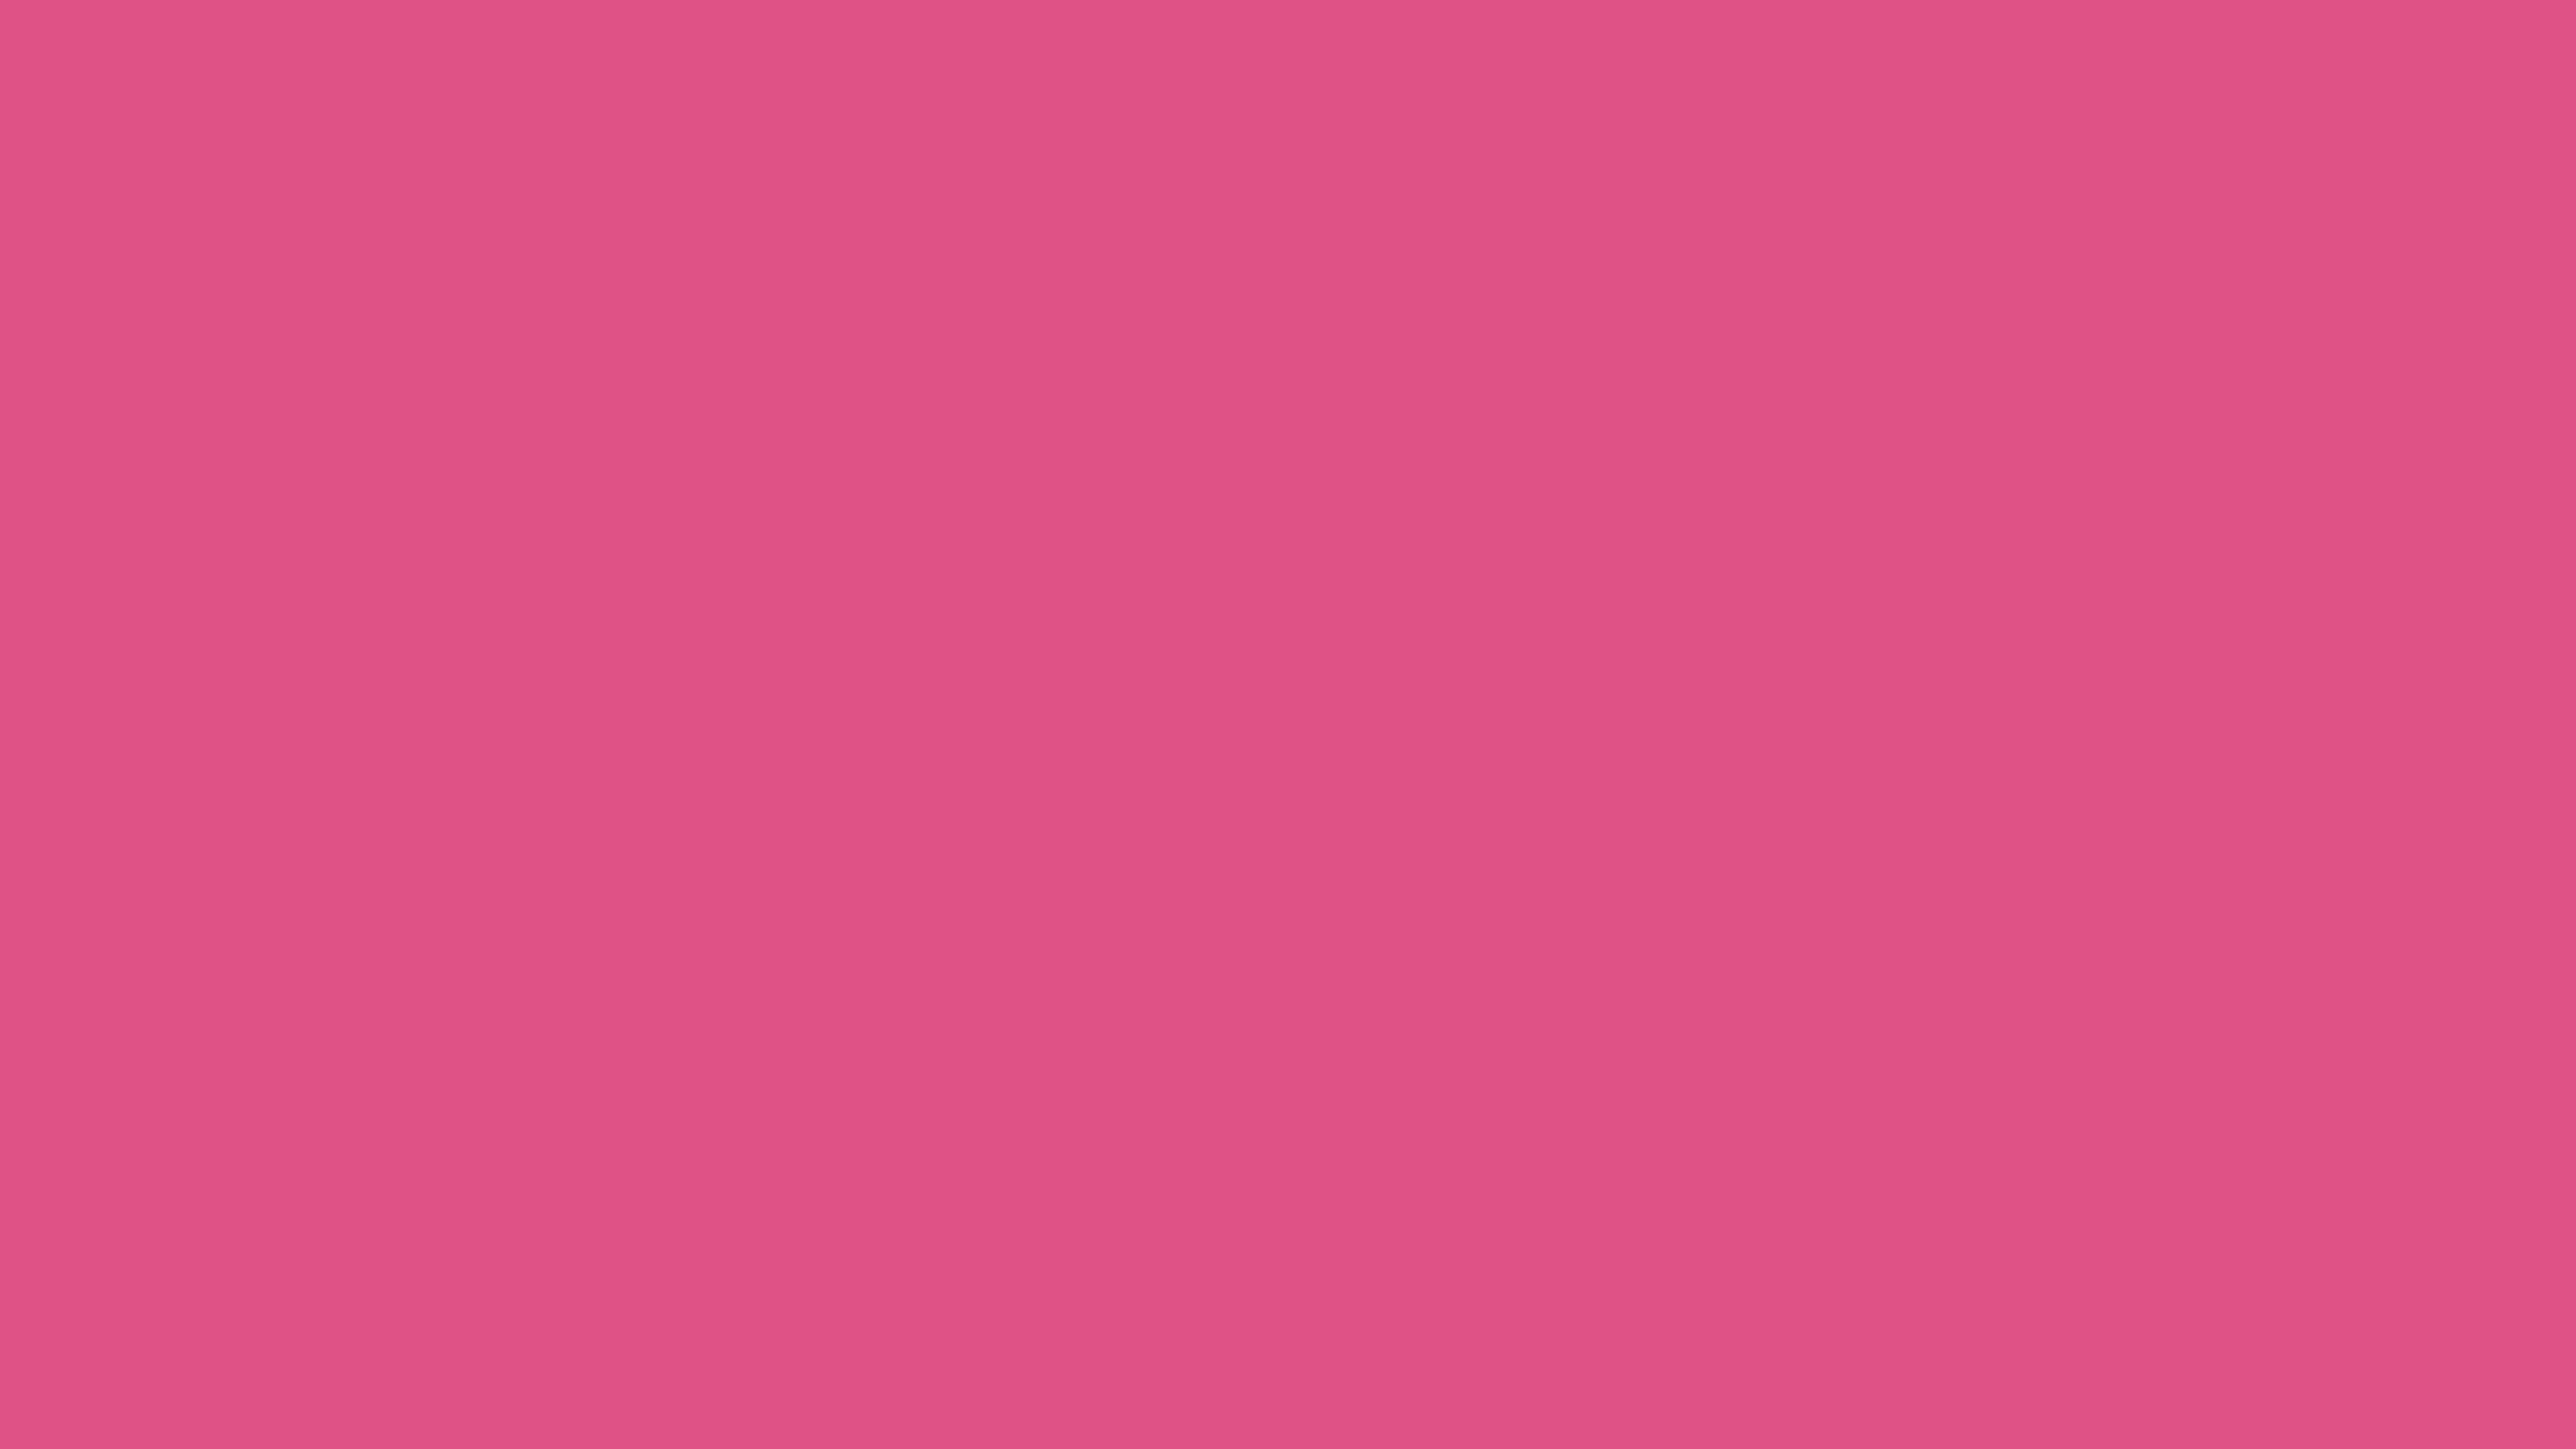 7680x4320 Fandango Pink Solid Color Background